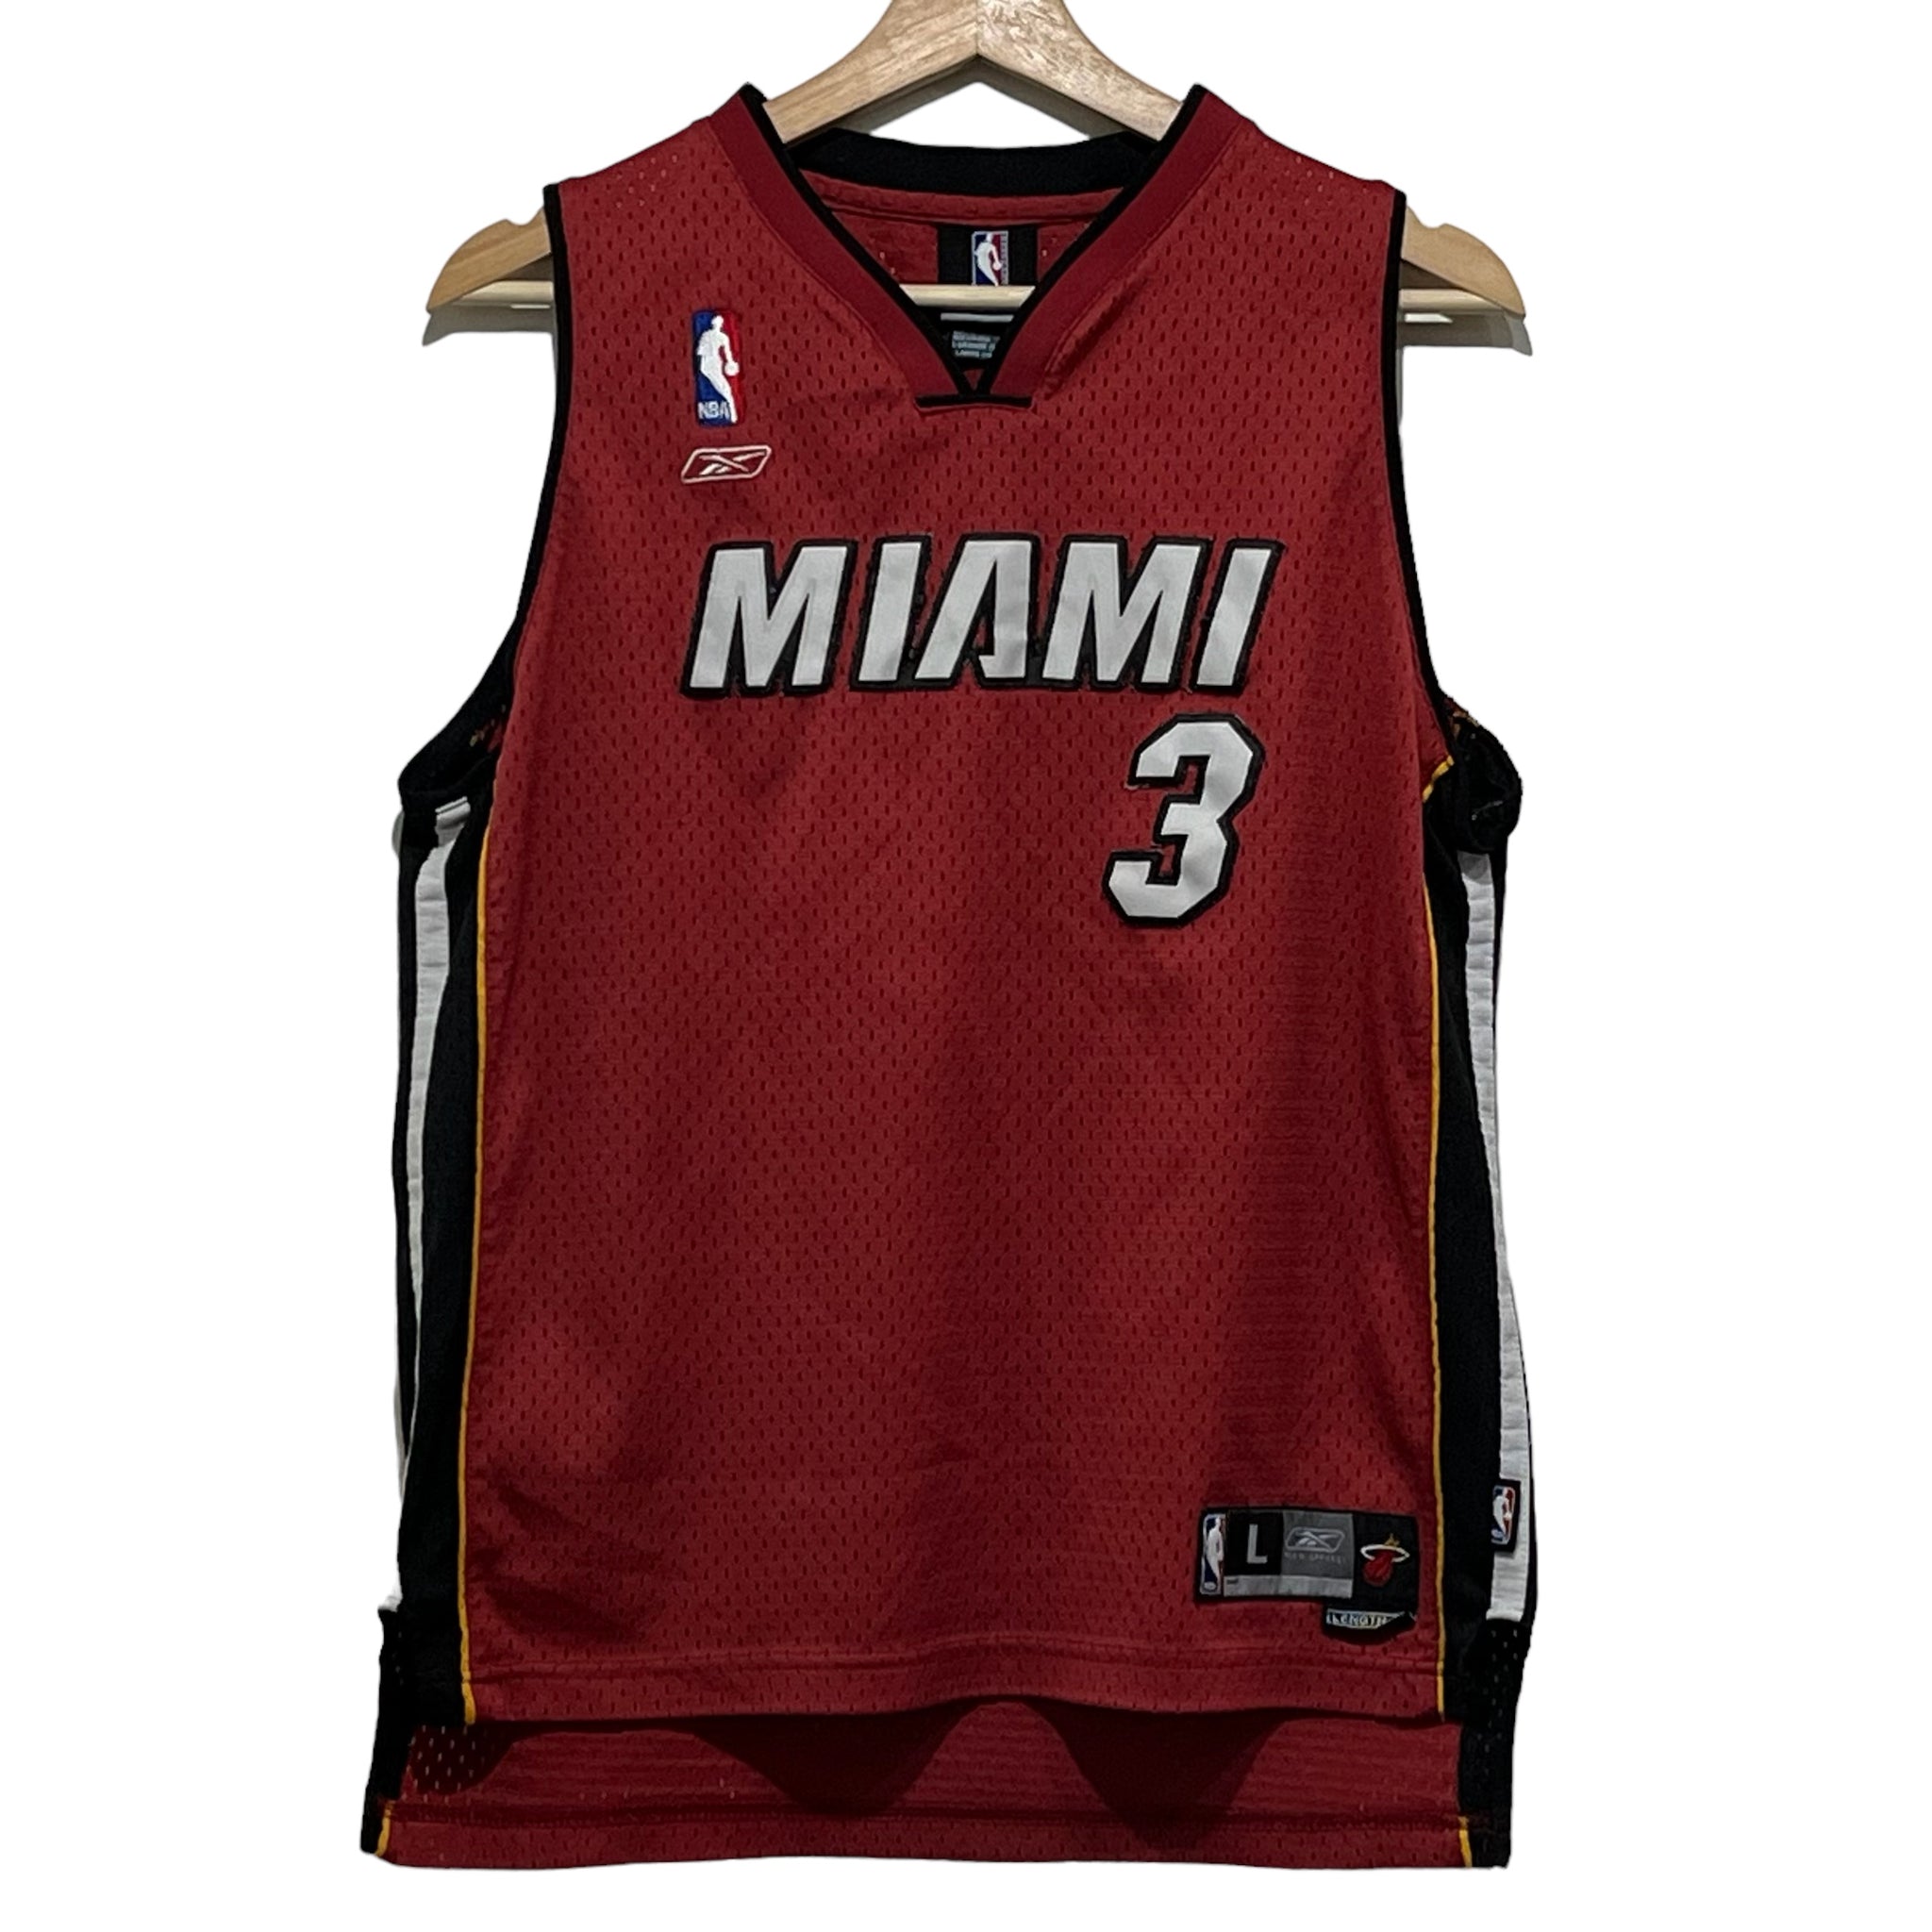 Dwyane Wade Miami Heat Jerseys, Dwyane Wade Shirts, Dwyane Wade Gear